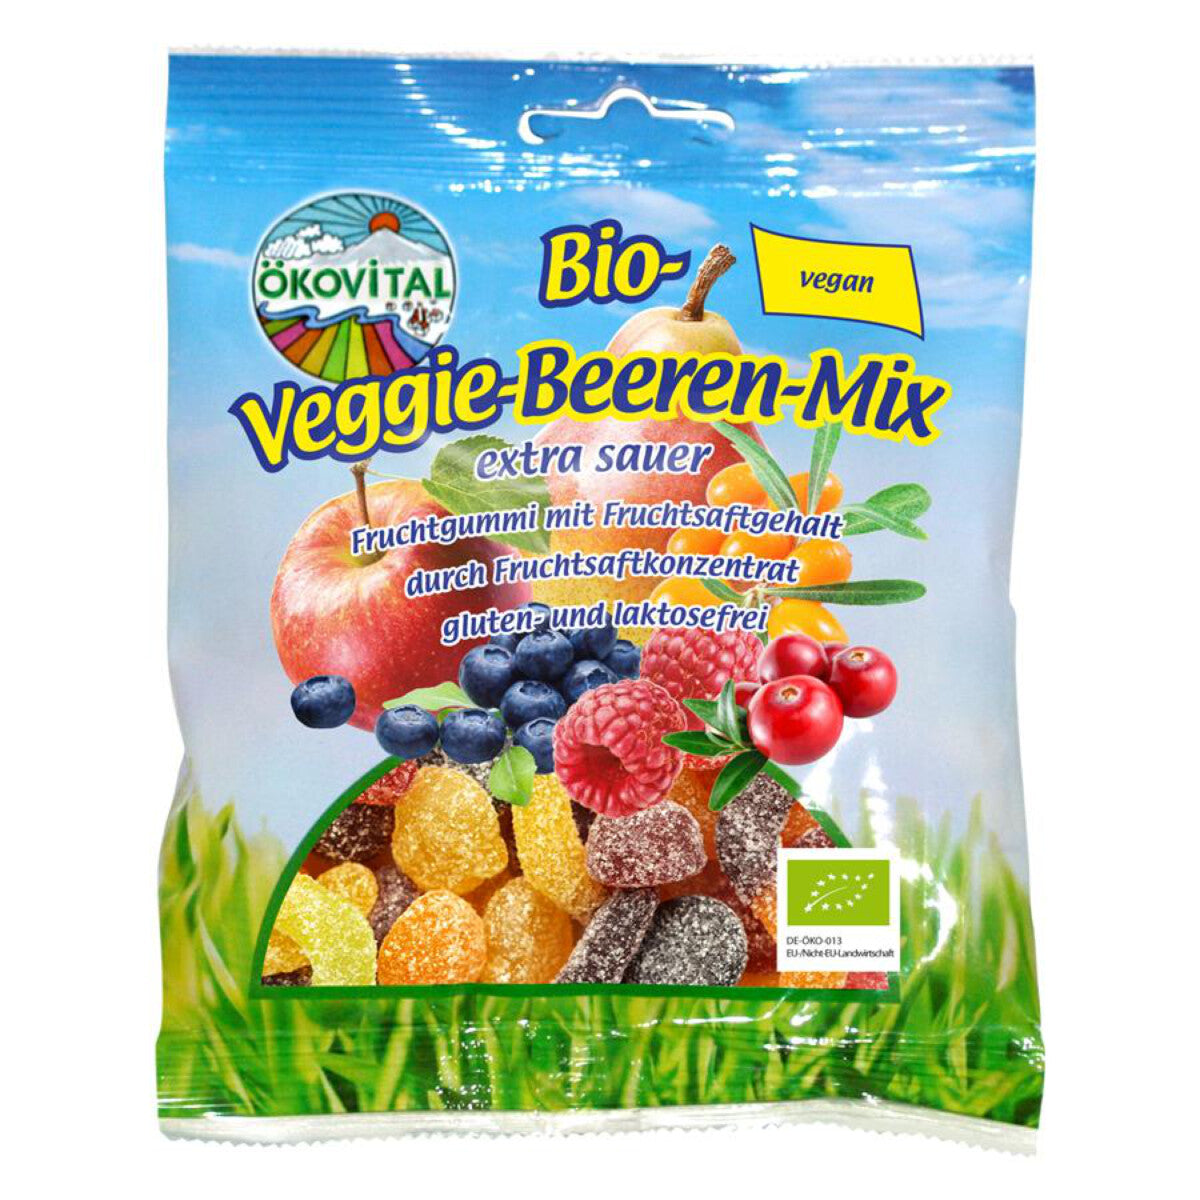 ÖKOVITAL RÖSNER Veggie Beeren Mix, extra sauer - 100 g